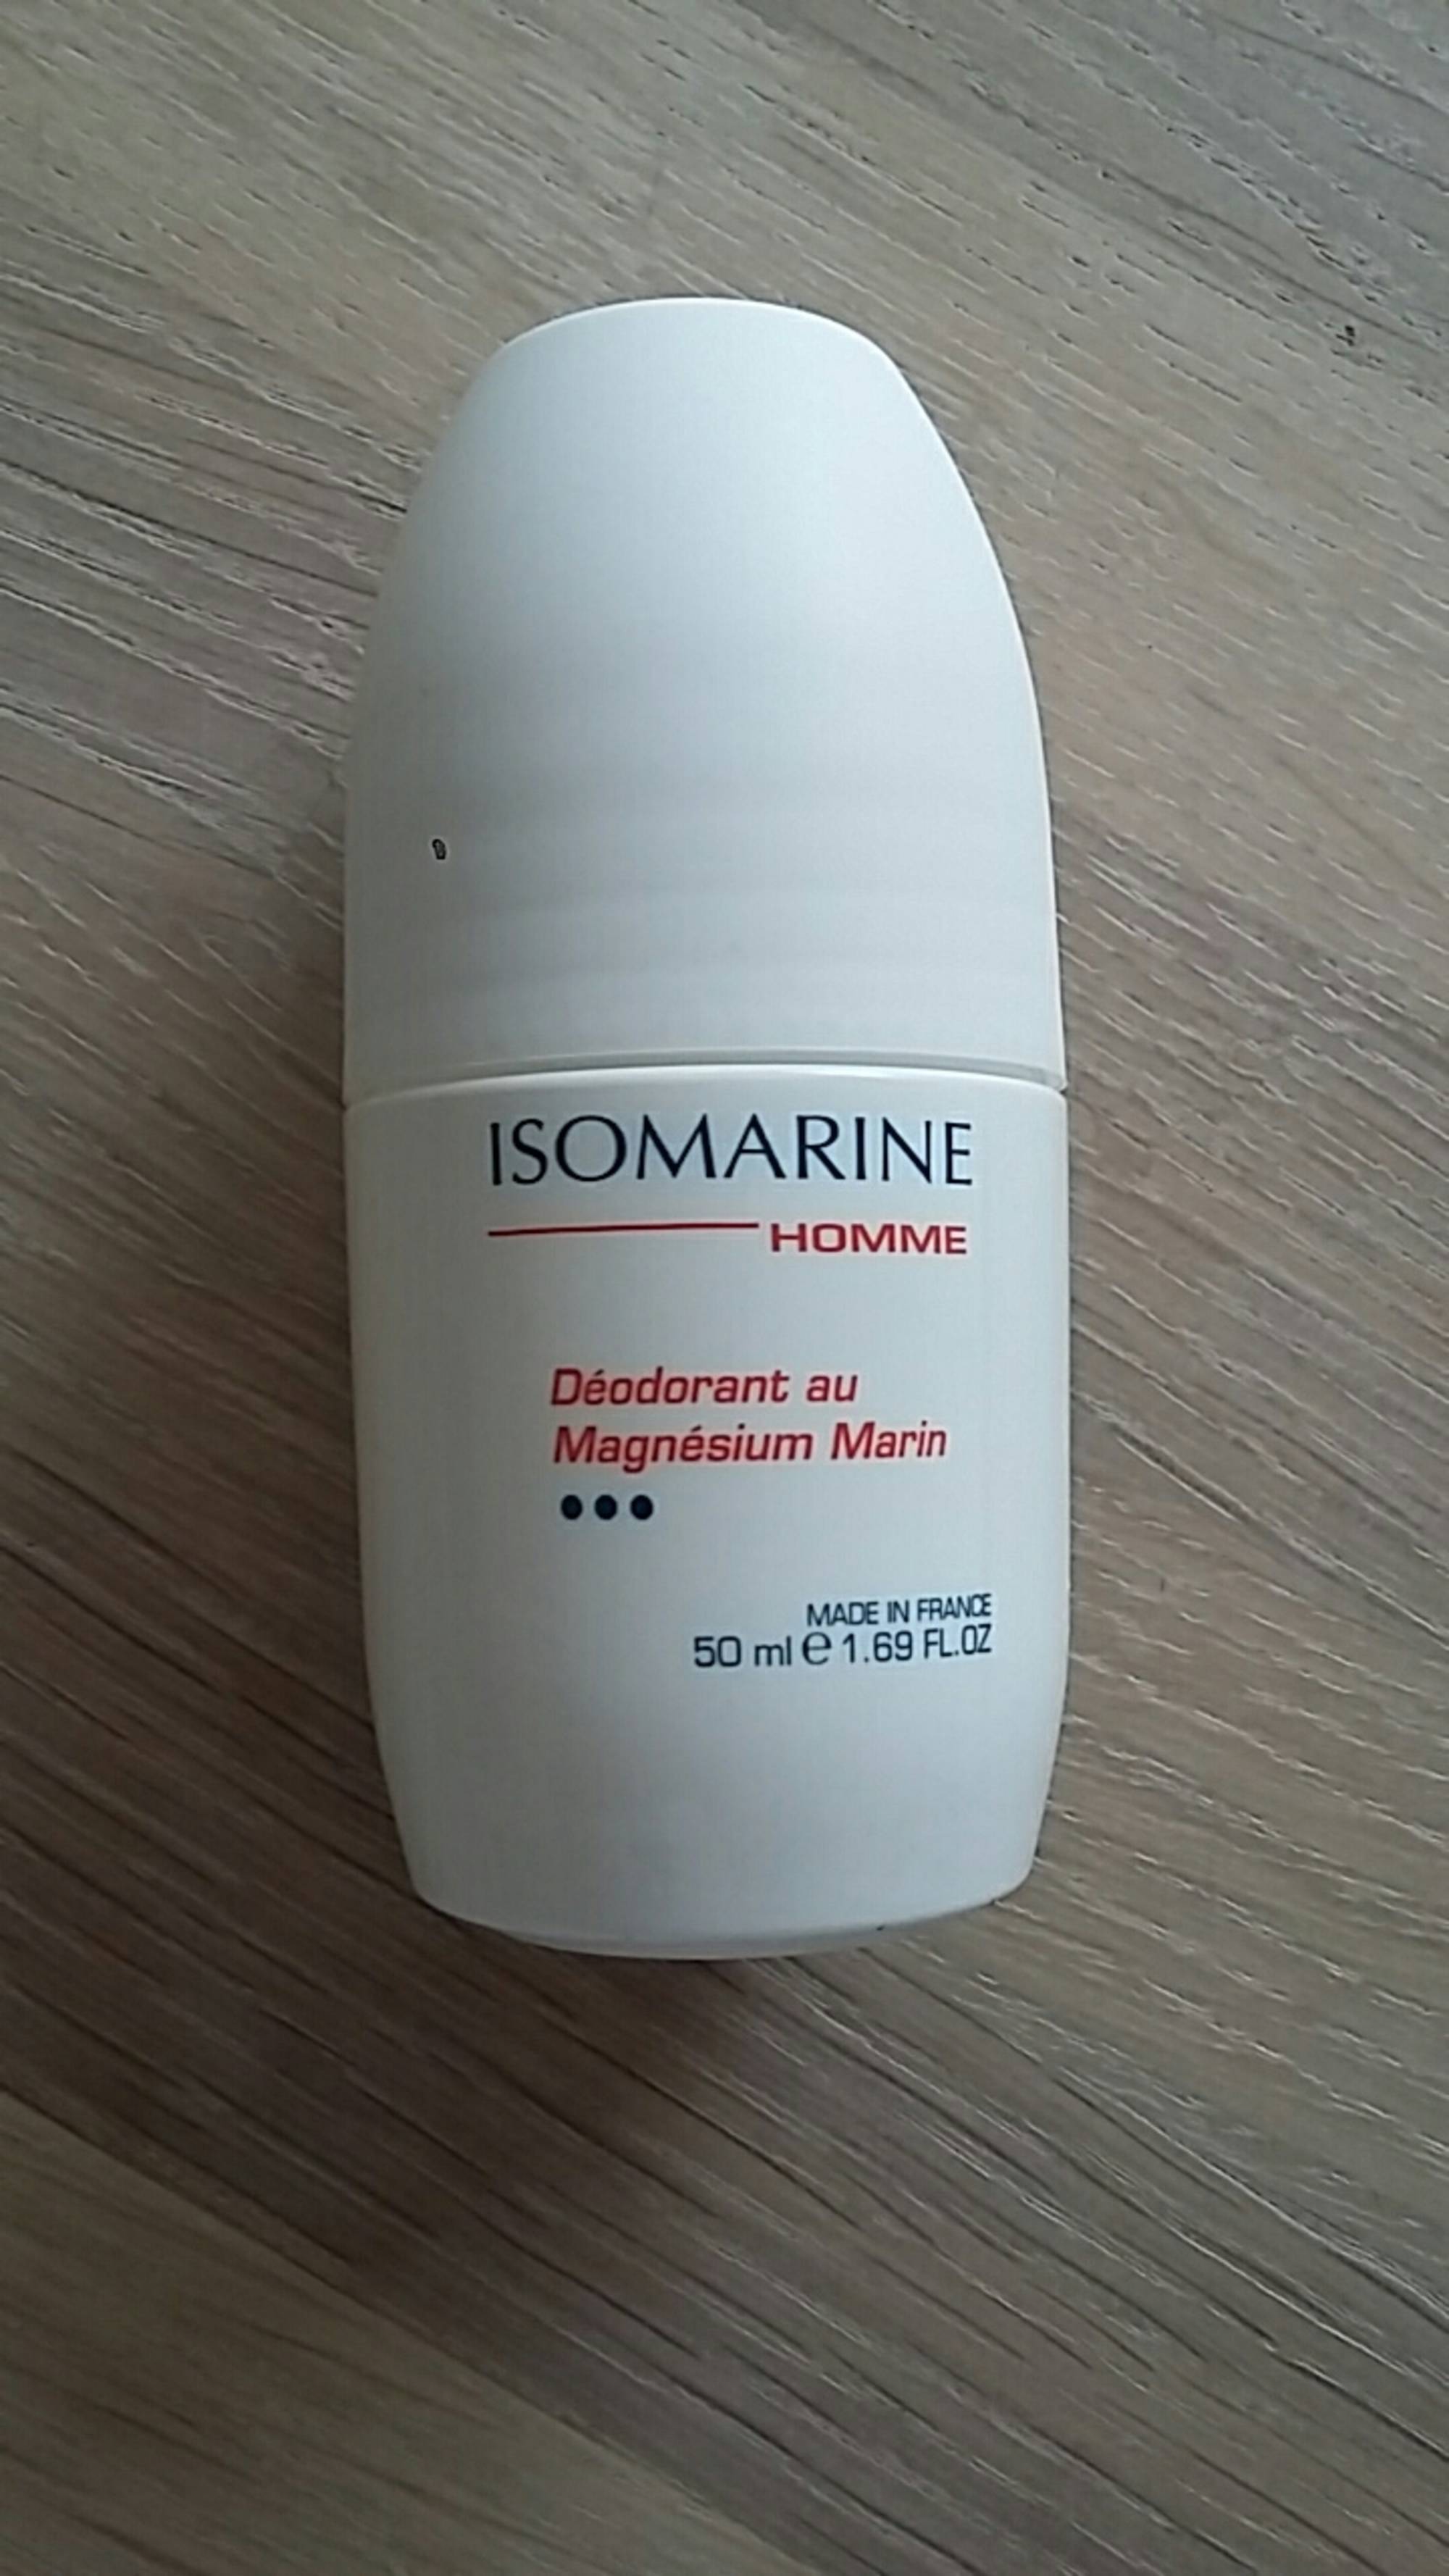 ISOMARINE - Homme - Déodorant au magnésium marin